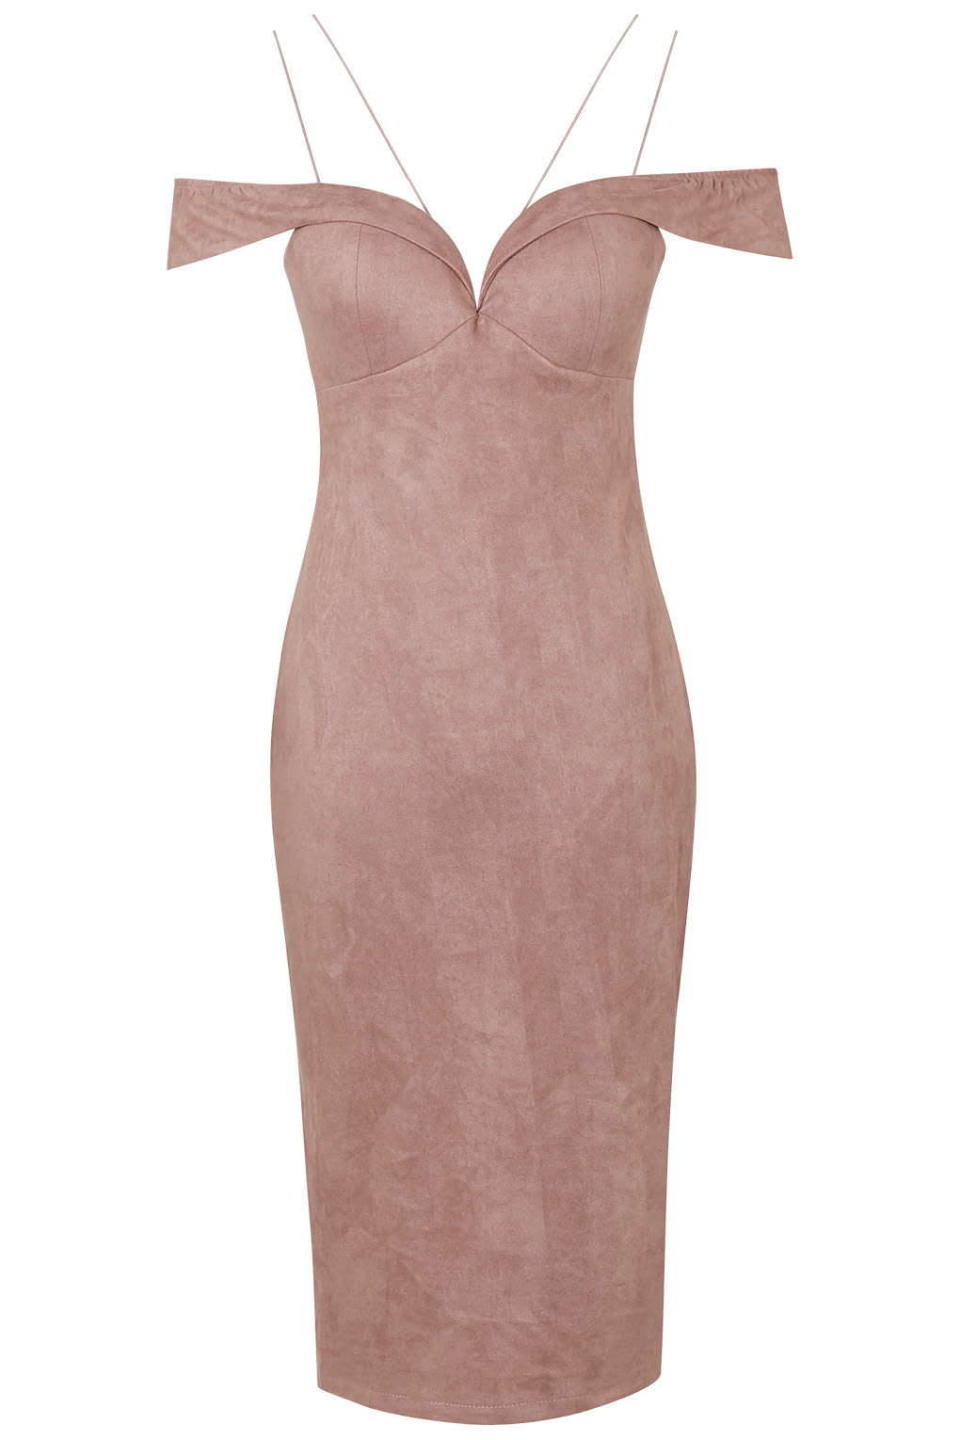 Topshop Faux Suede Bardot Midi Dress, $101